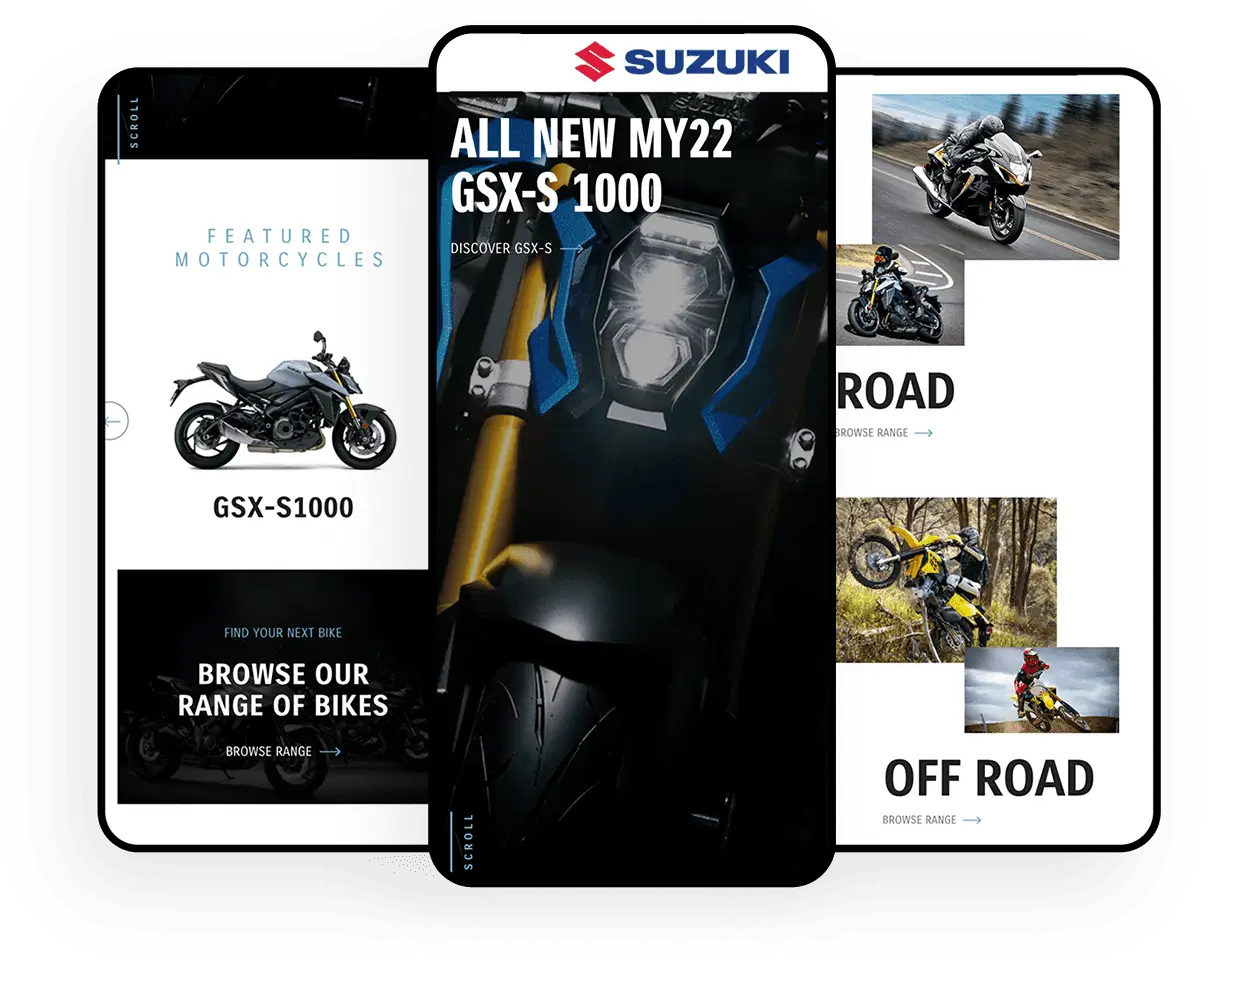 Suzuki website design mockup preview on mobile device